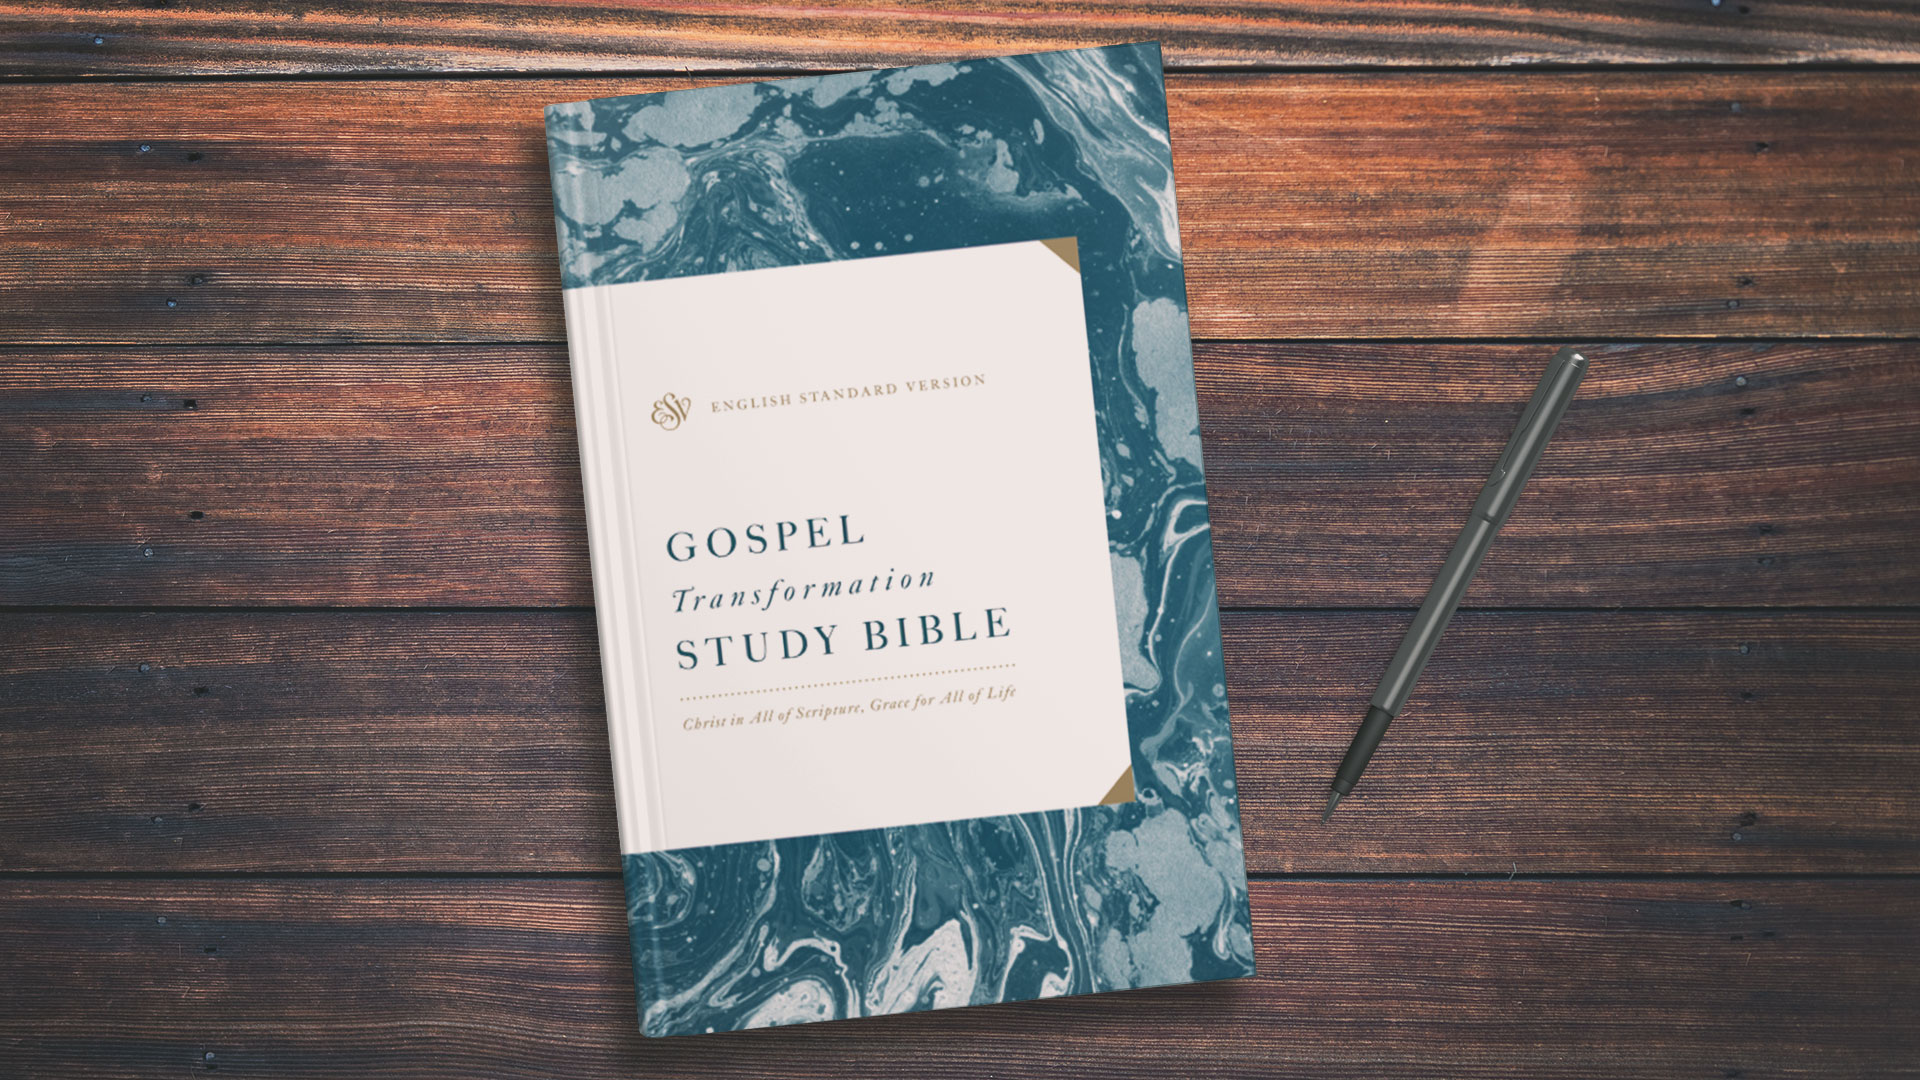 Gospel transformation study bible Jesus